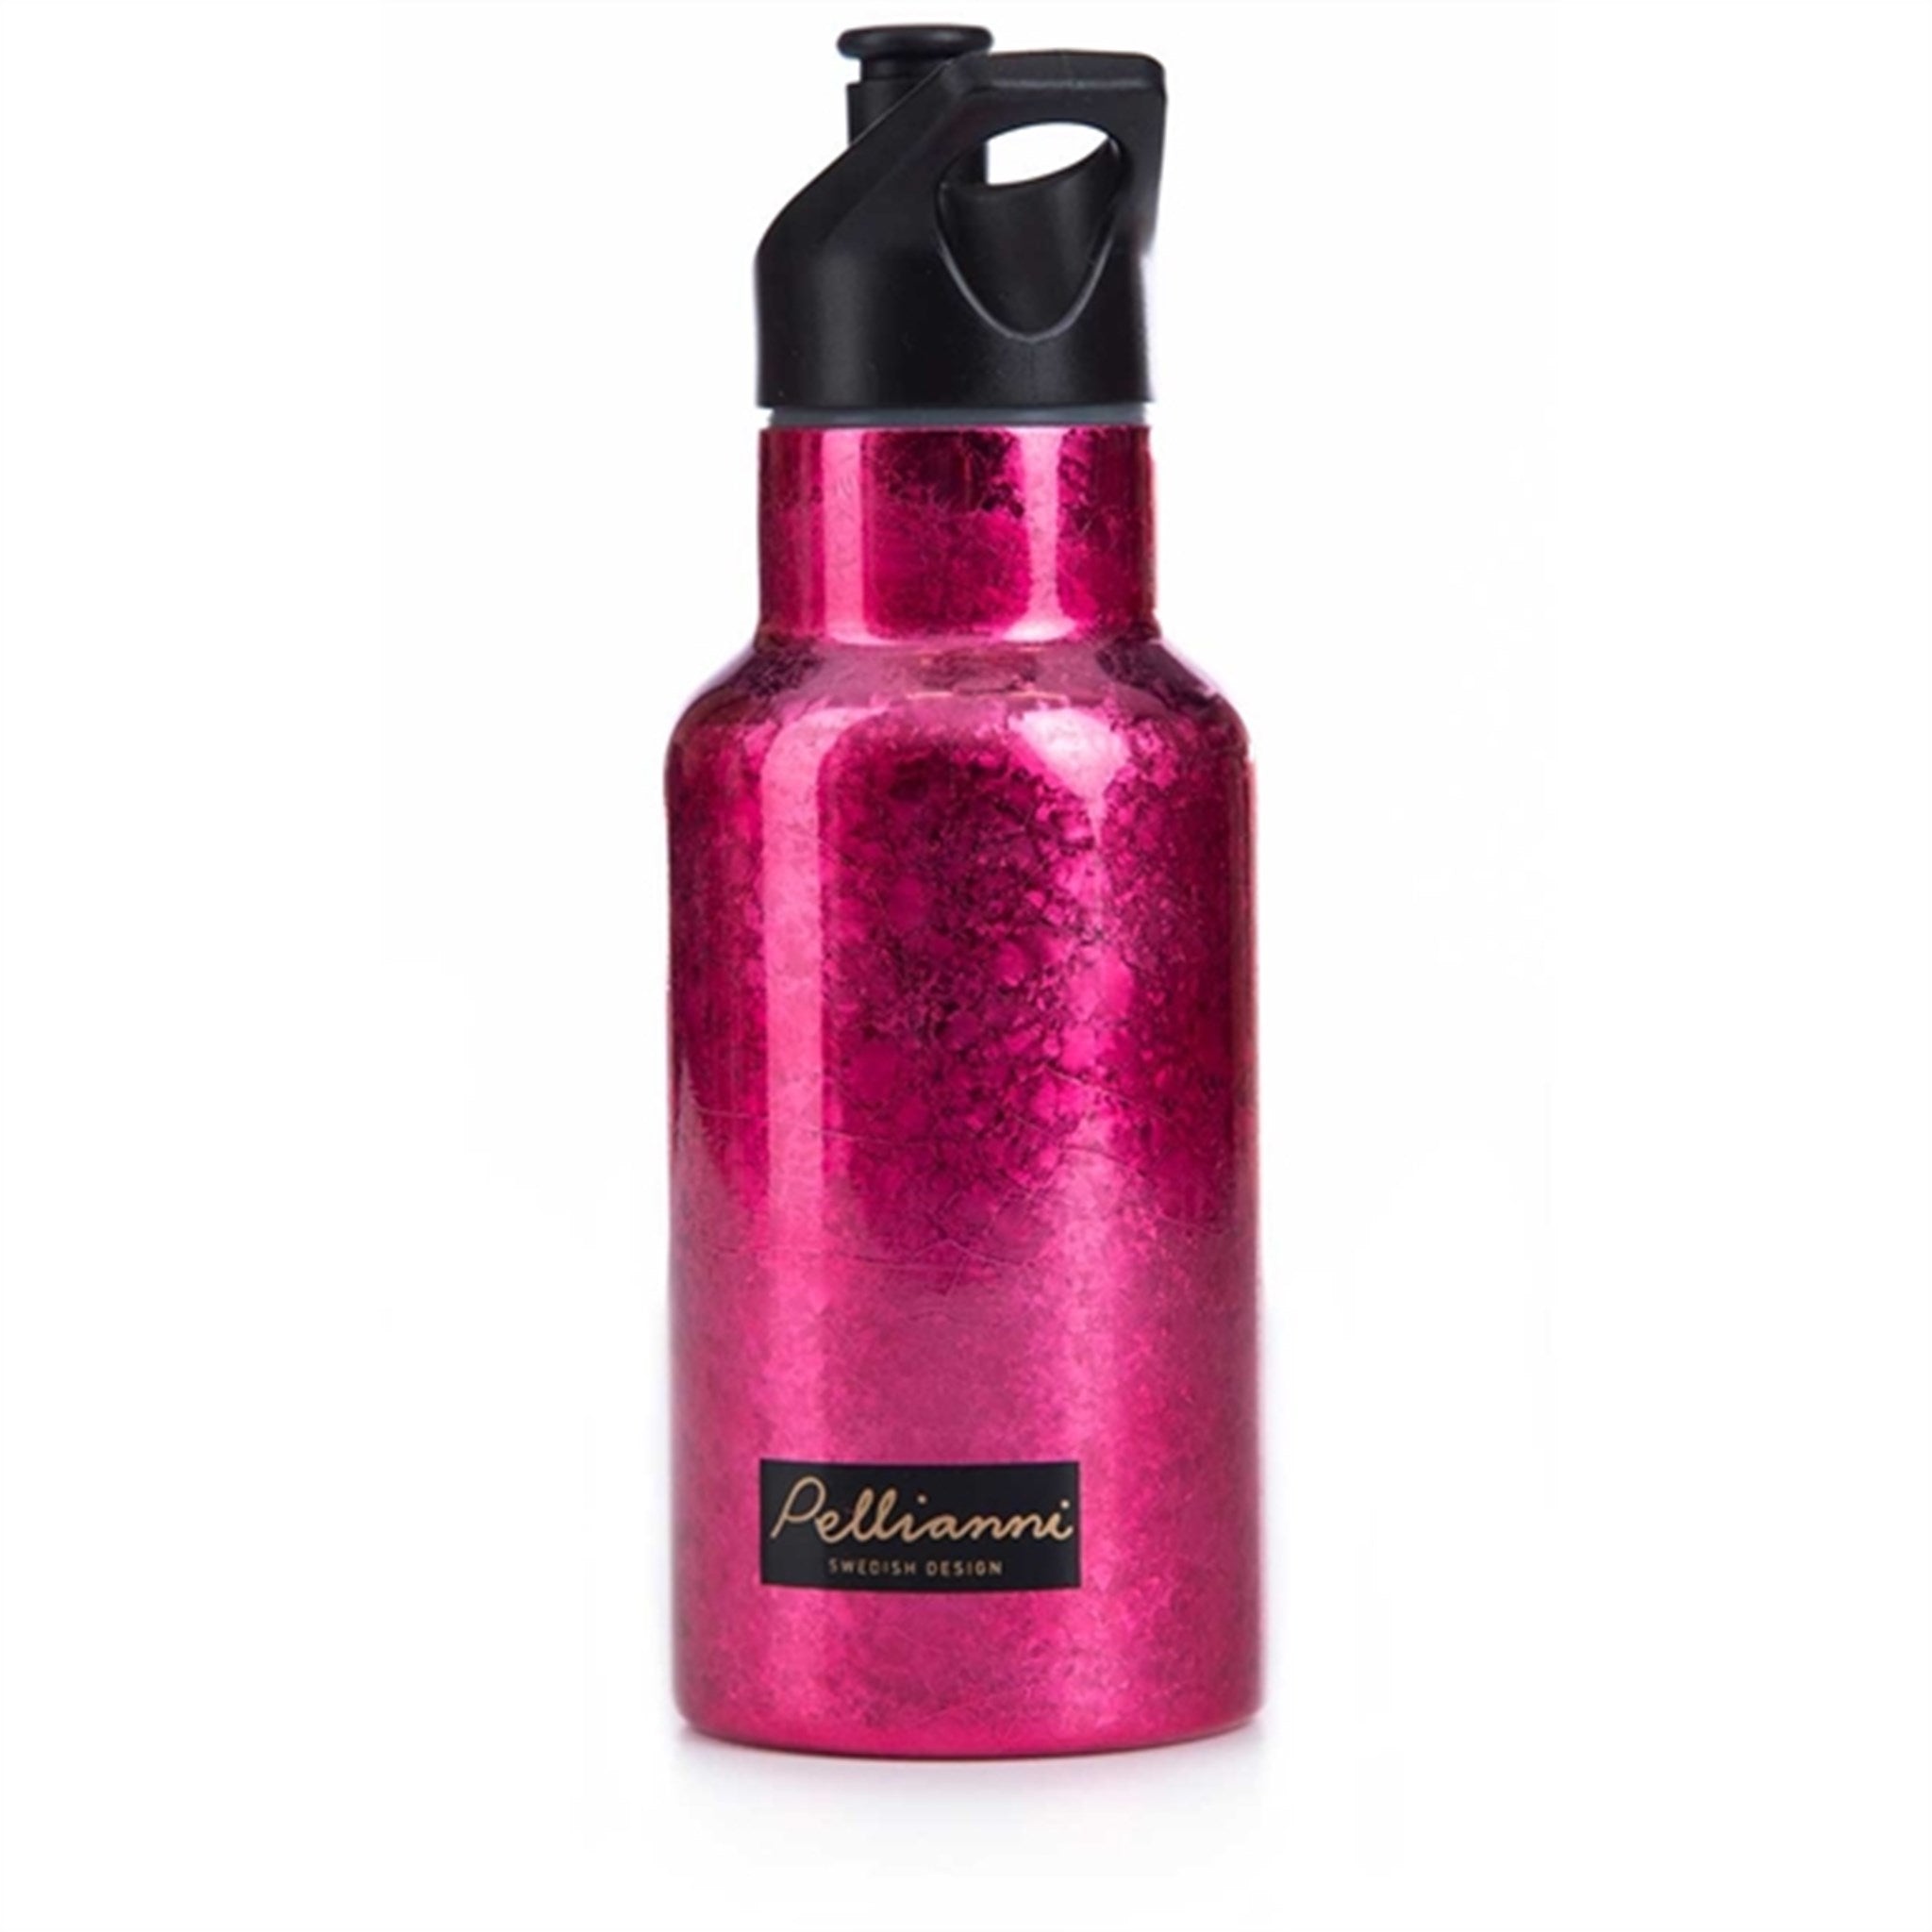 Pellianni Stainless Steel Bottle 350ml Pink